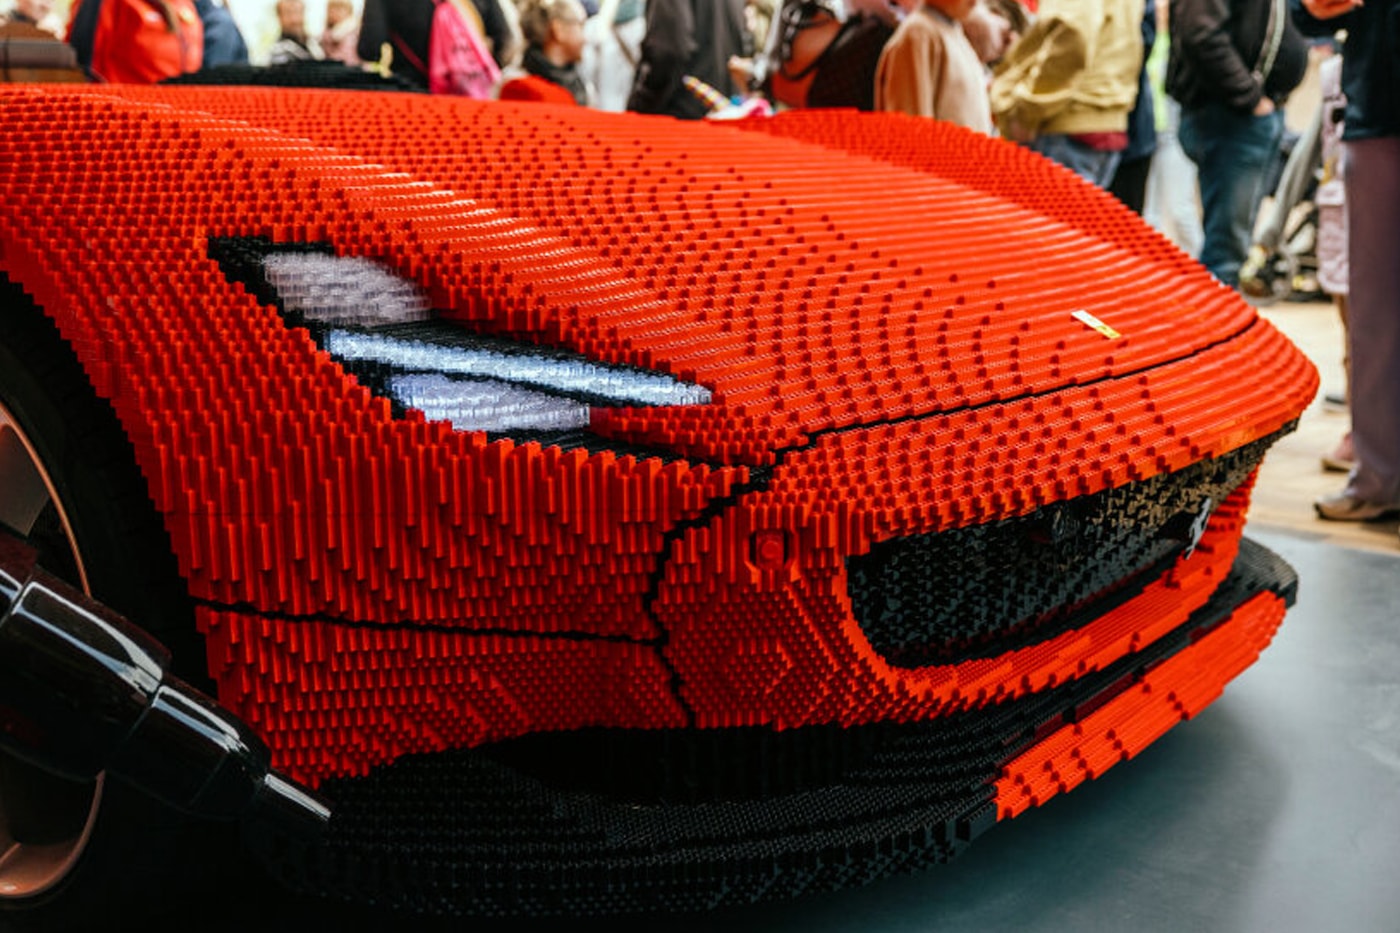 LEGO 實體化 1:1 尺寸 Ferrari 單座超跑 Monza SP1 積木模型